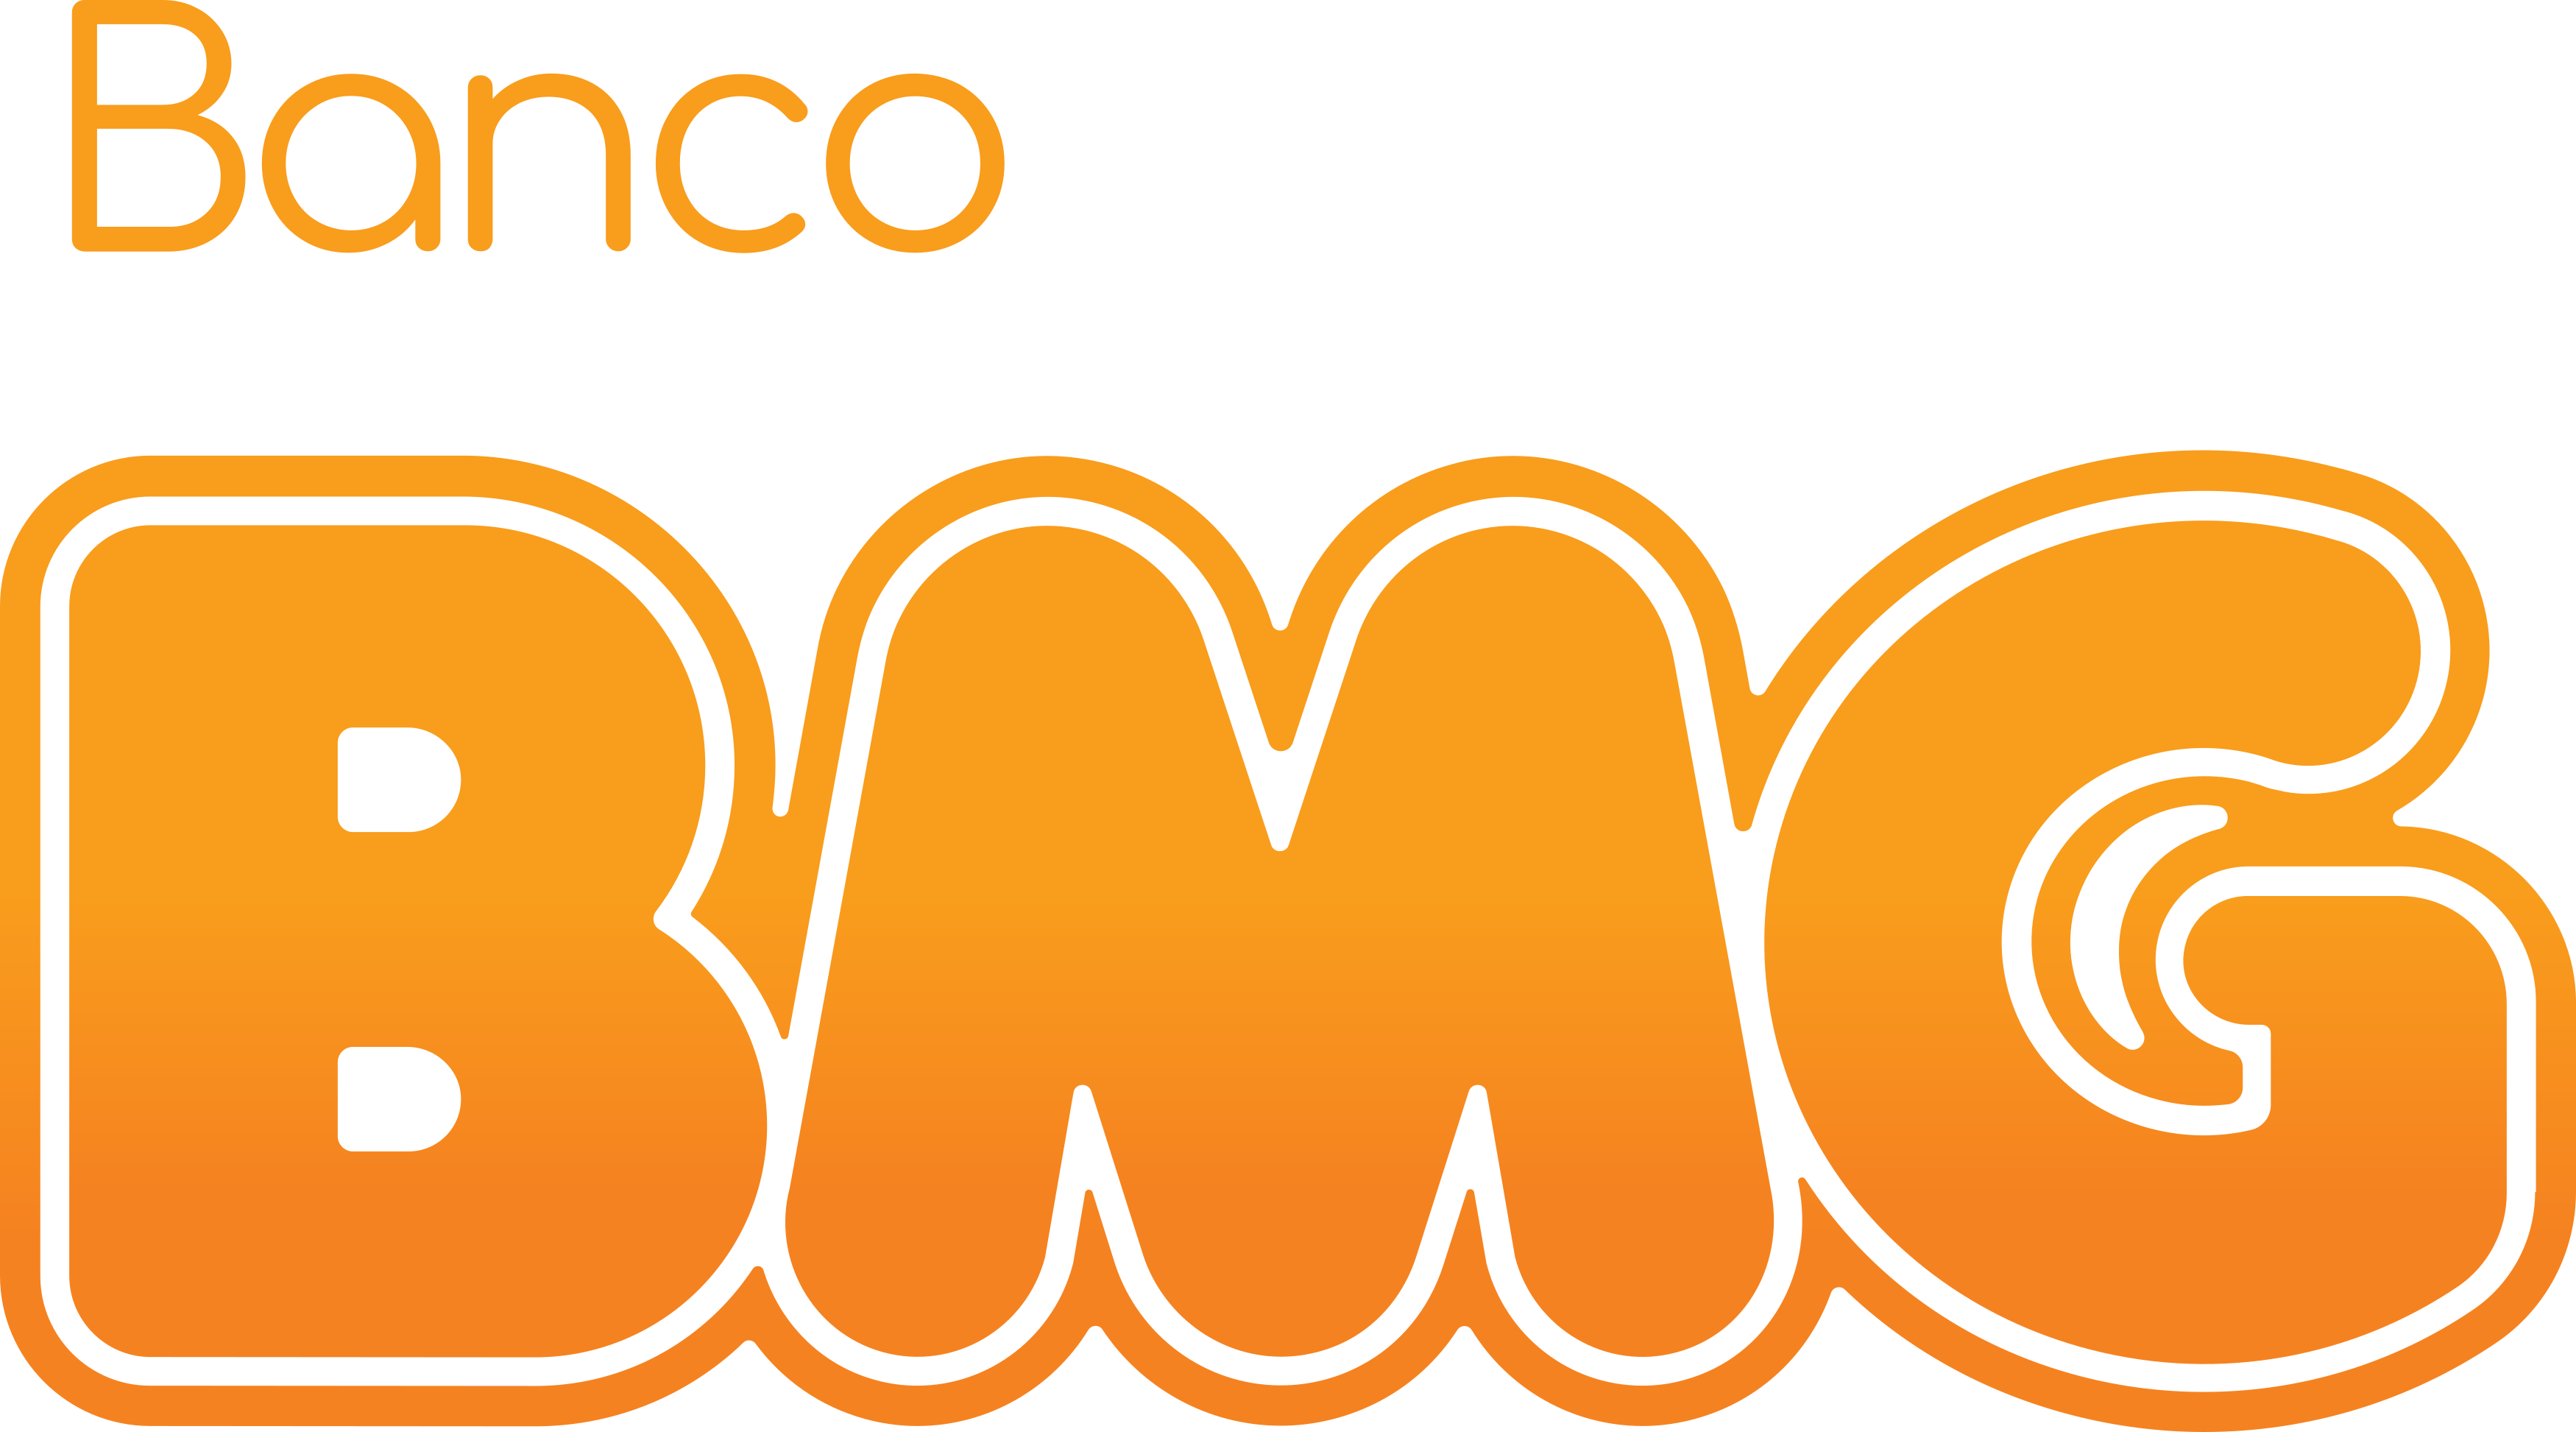 Banco BMG logo - PNG e Vetor - Download de Logo